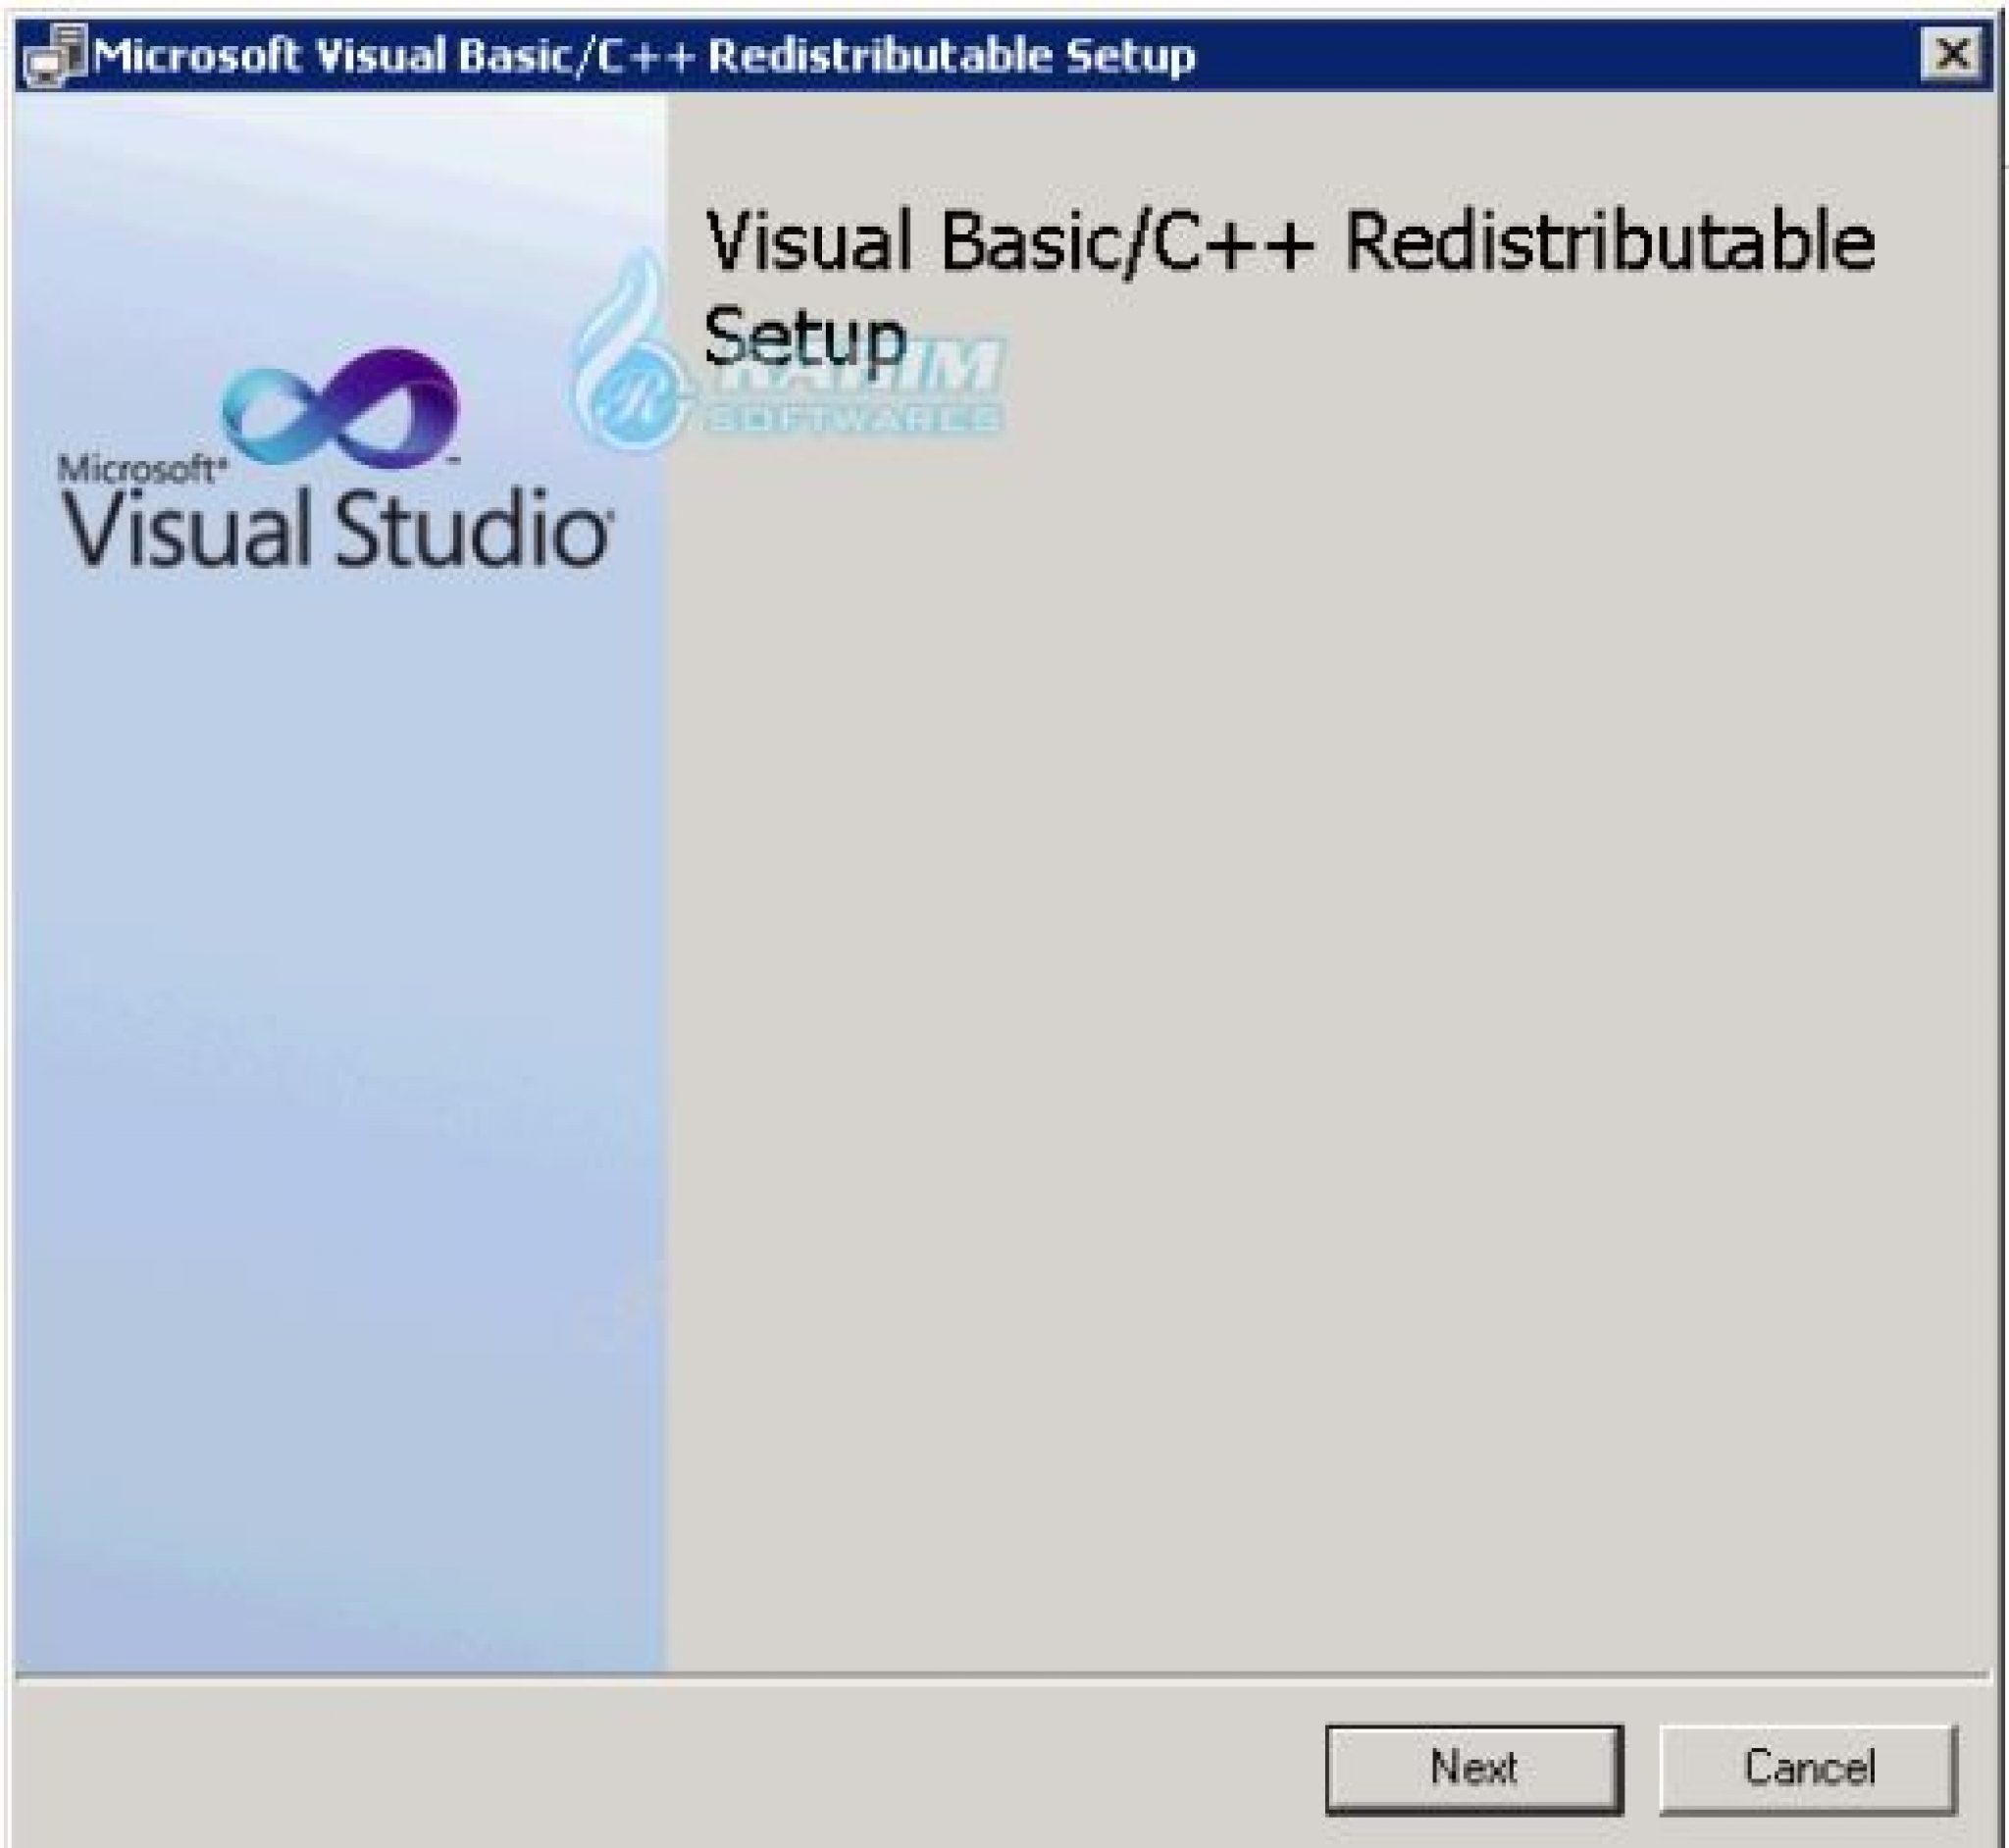 Microsoft Visual C